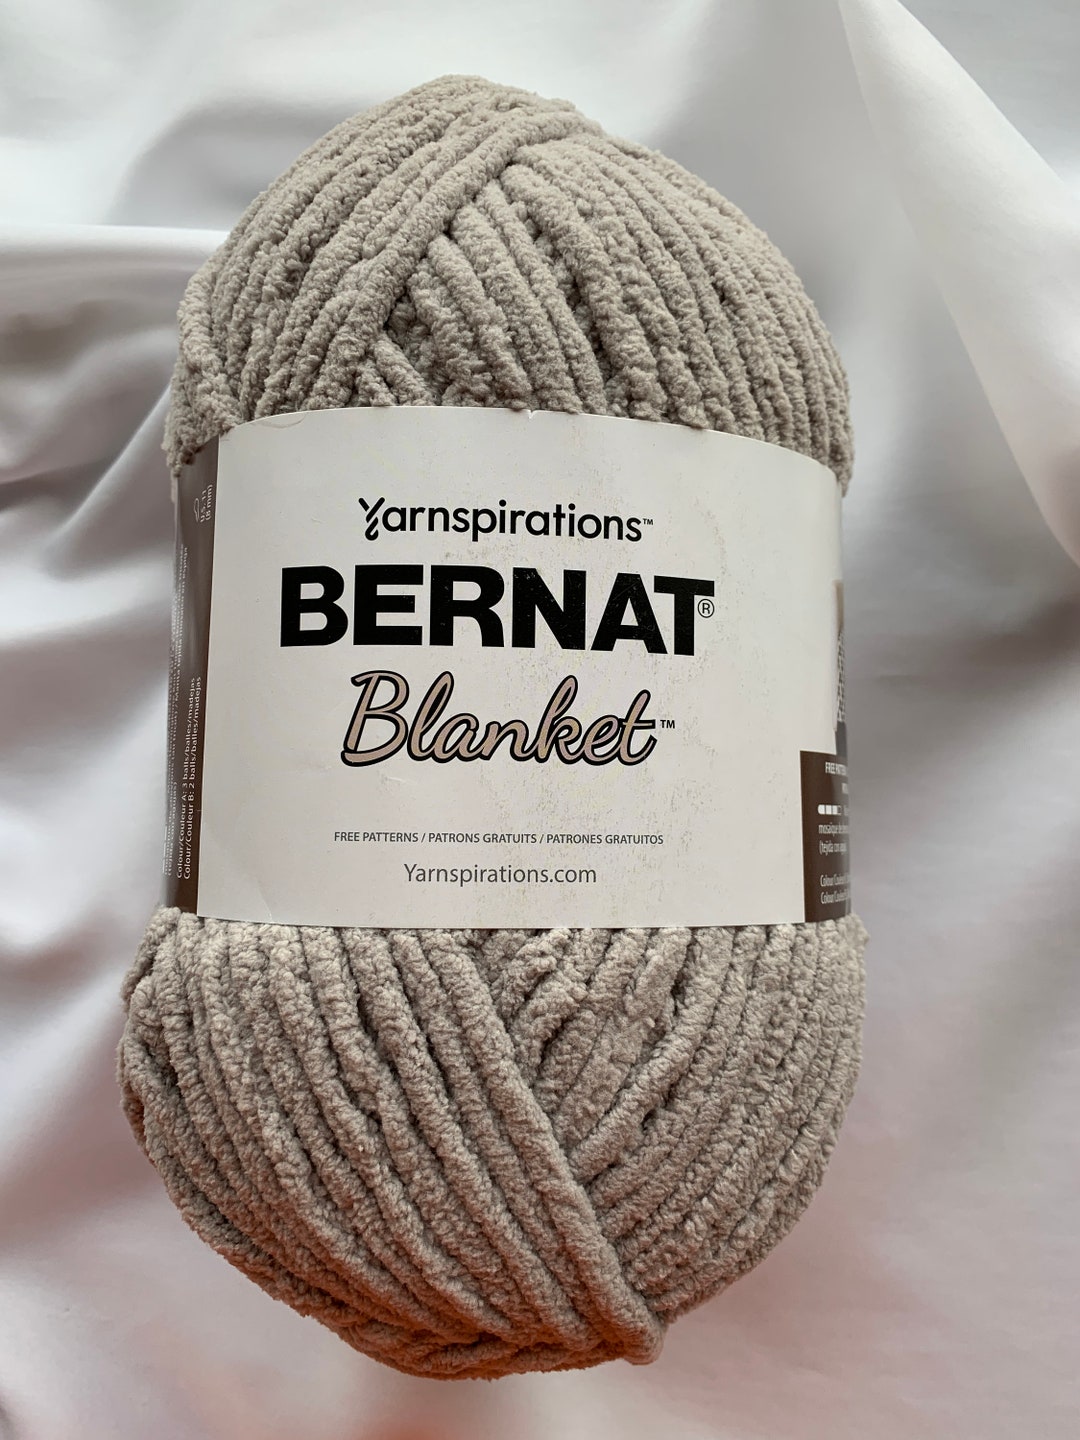 Bernat Blanket Brights Royal Blue Yarn - 2 Pack of 300g/10.5oz - Polyester - 6 Super Bulky - 220 Yards - Knitting/Crochet